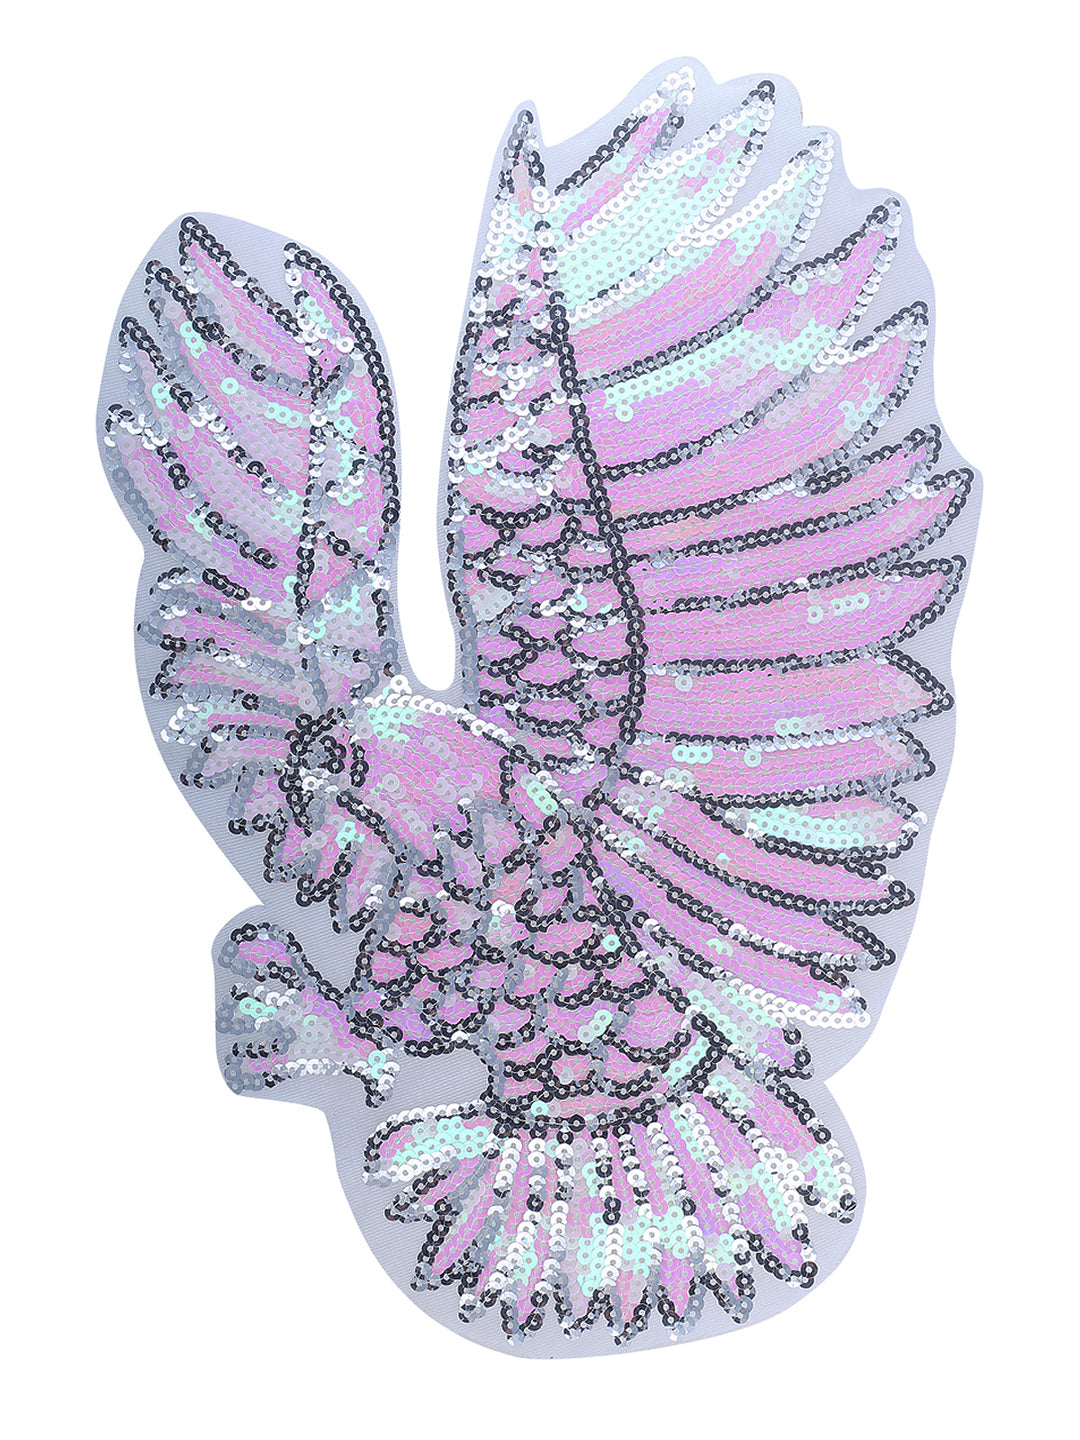 Marvelous Iridescent Eagle Bird Sequins Patch